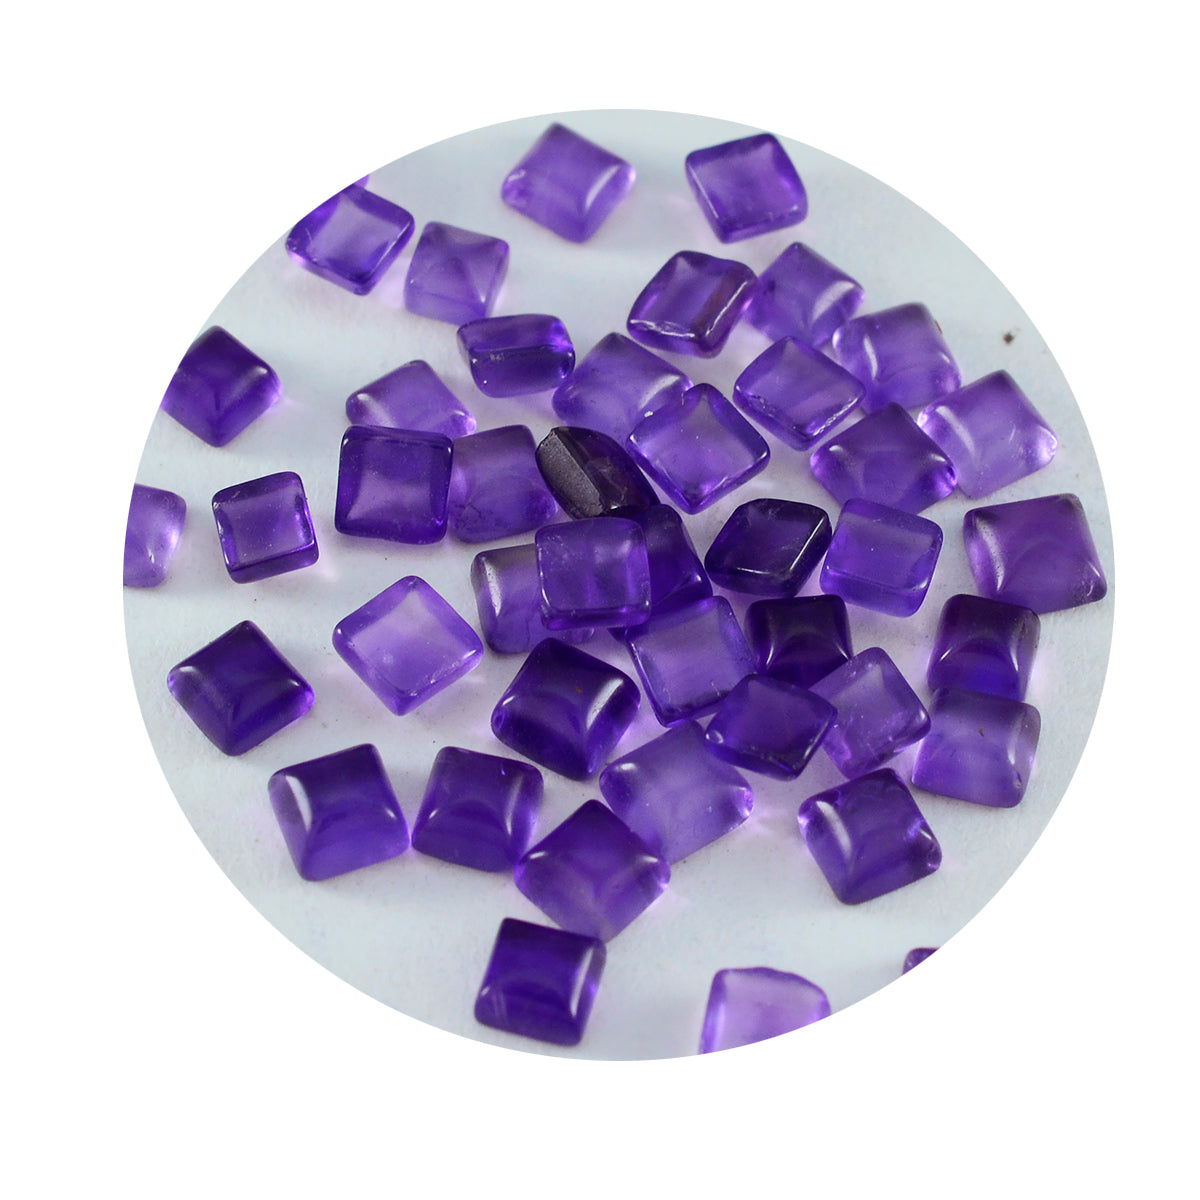 Riyogems 1PC Purple Amethyst Cabochon 4X4 mm Square Shape Good Quality Loose Gemstone